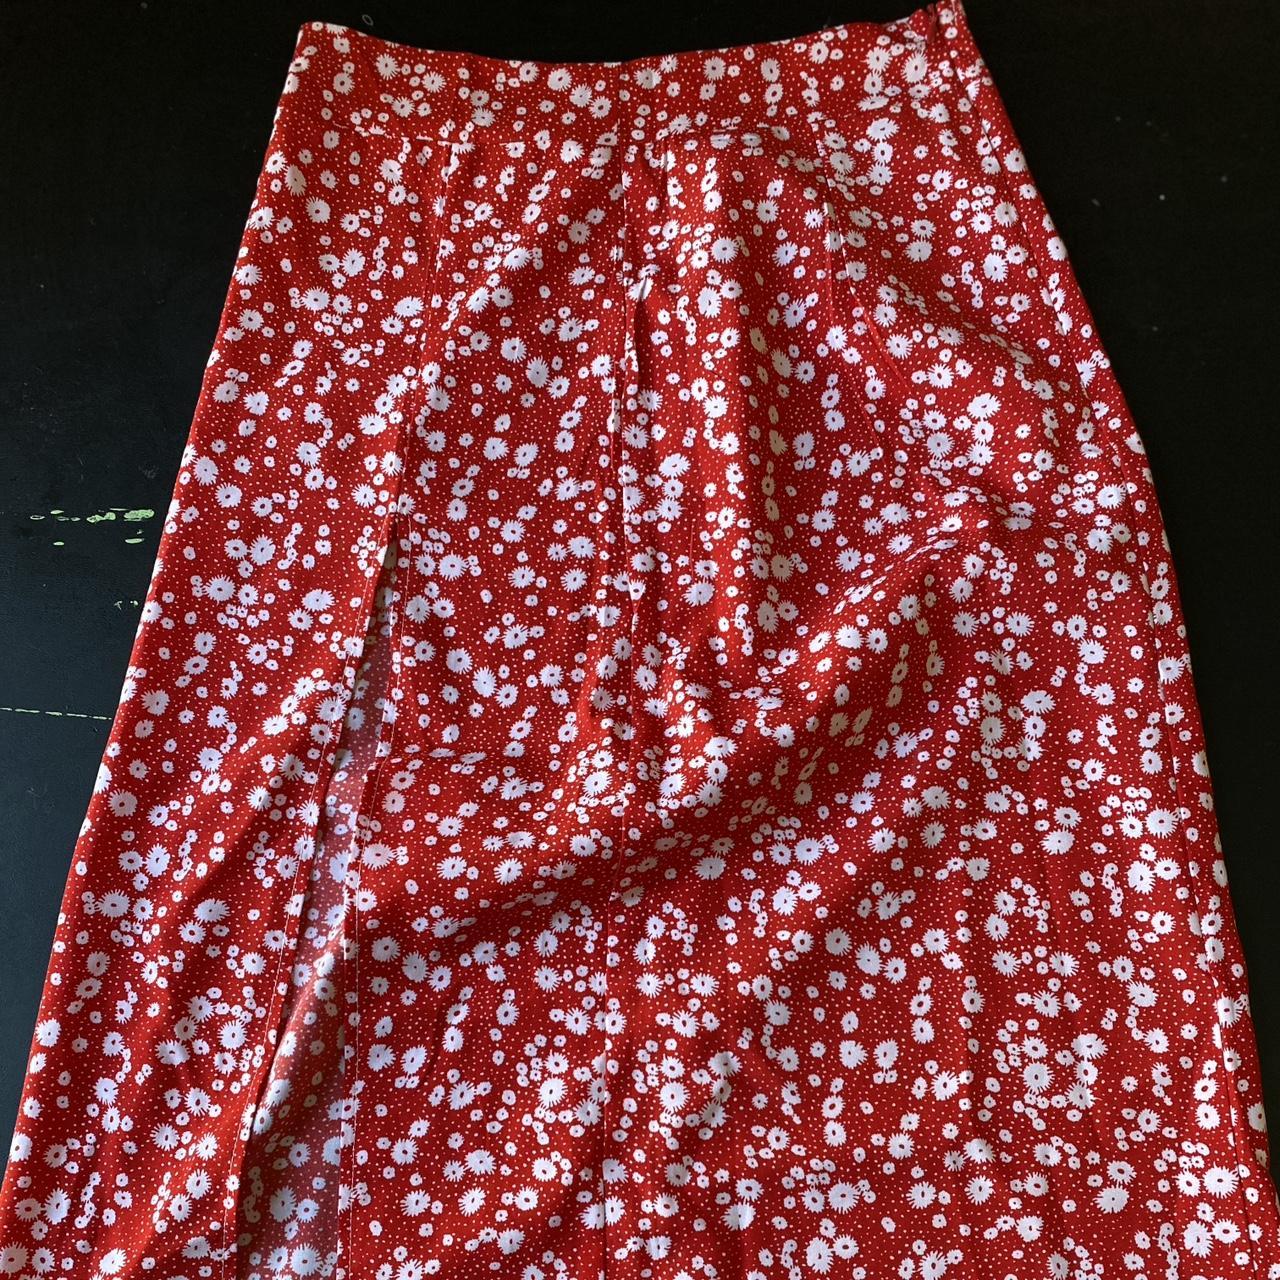 SHEIN Women's Red and White Skirt